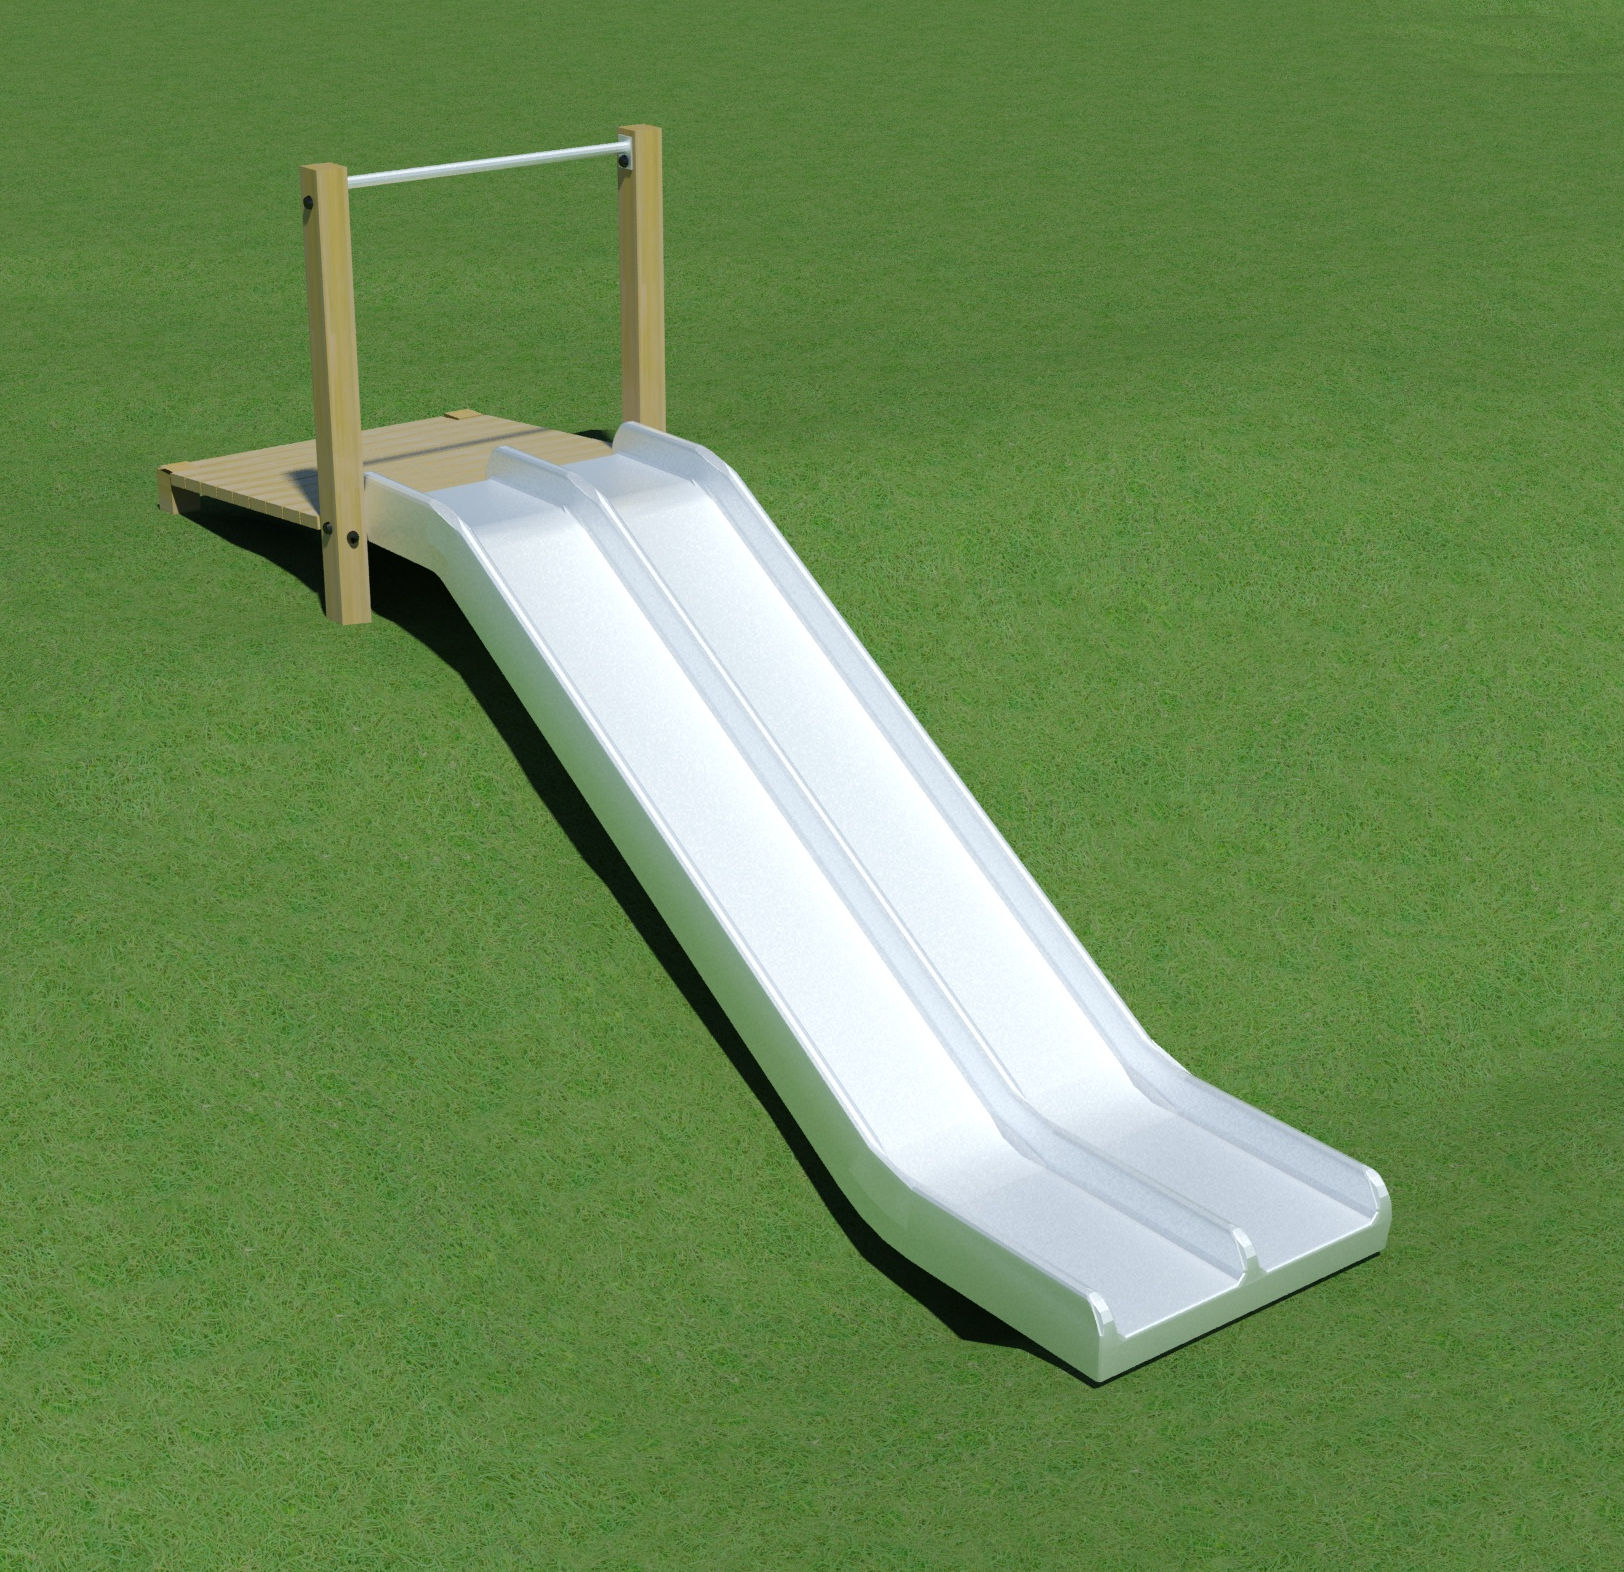 Double Slide